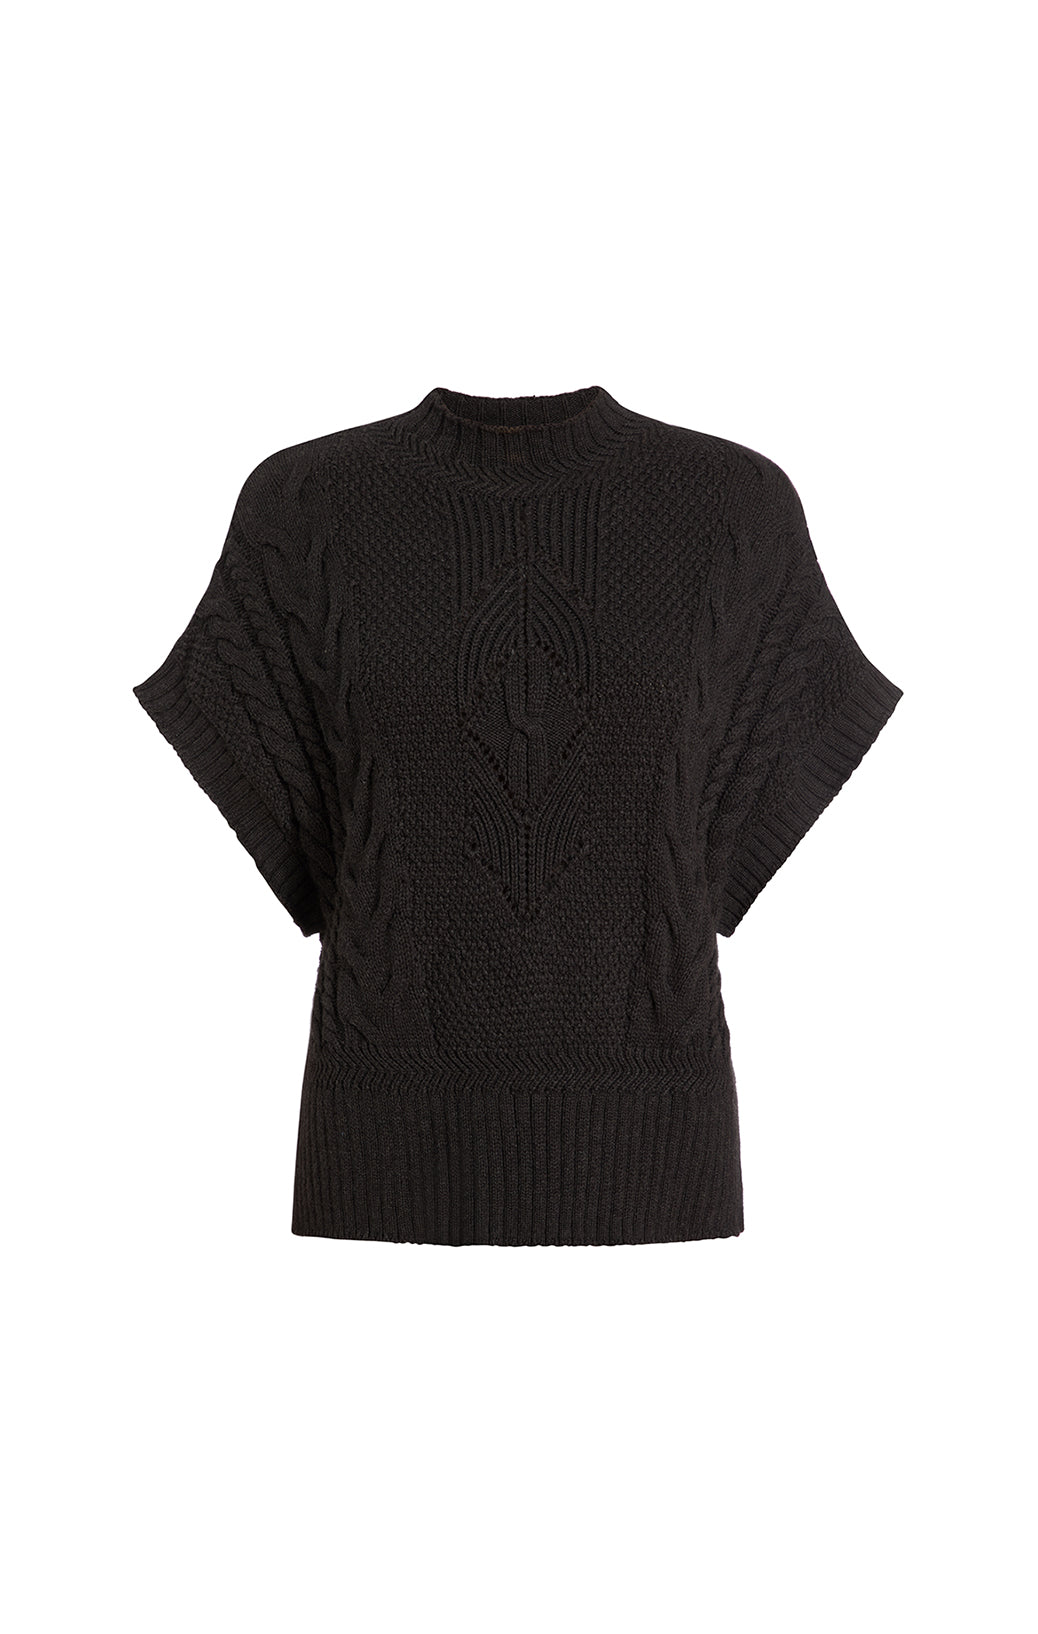 Ursa Major - Knit Faux-Fur 
Sweater - Product Image